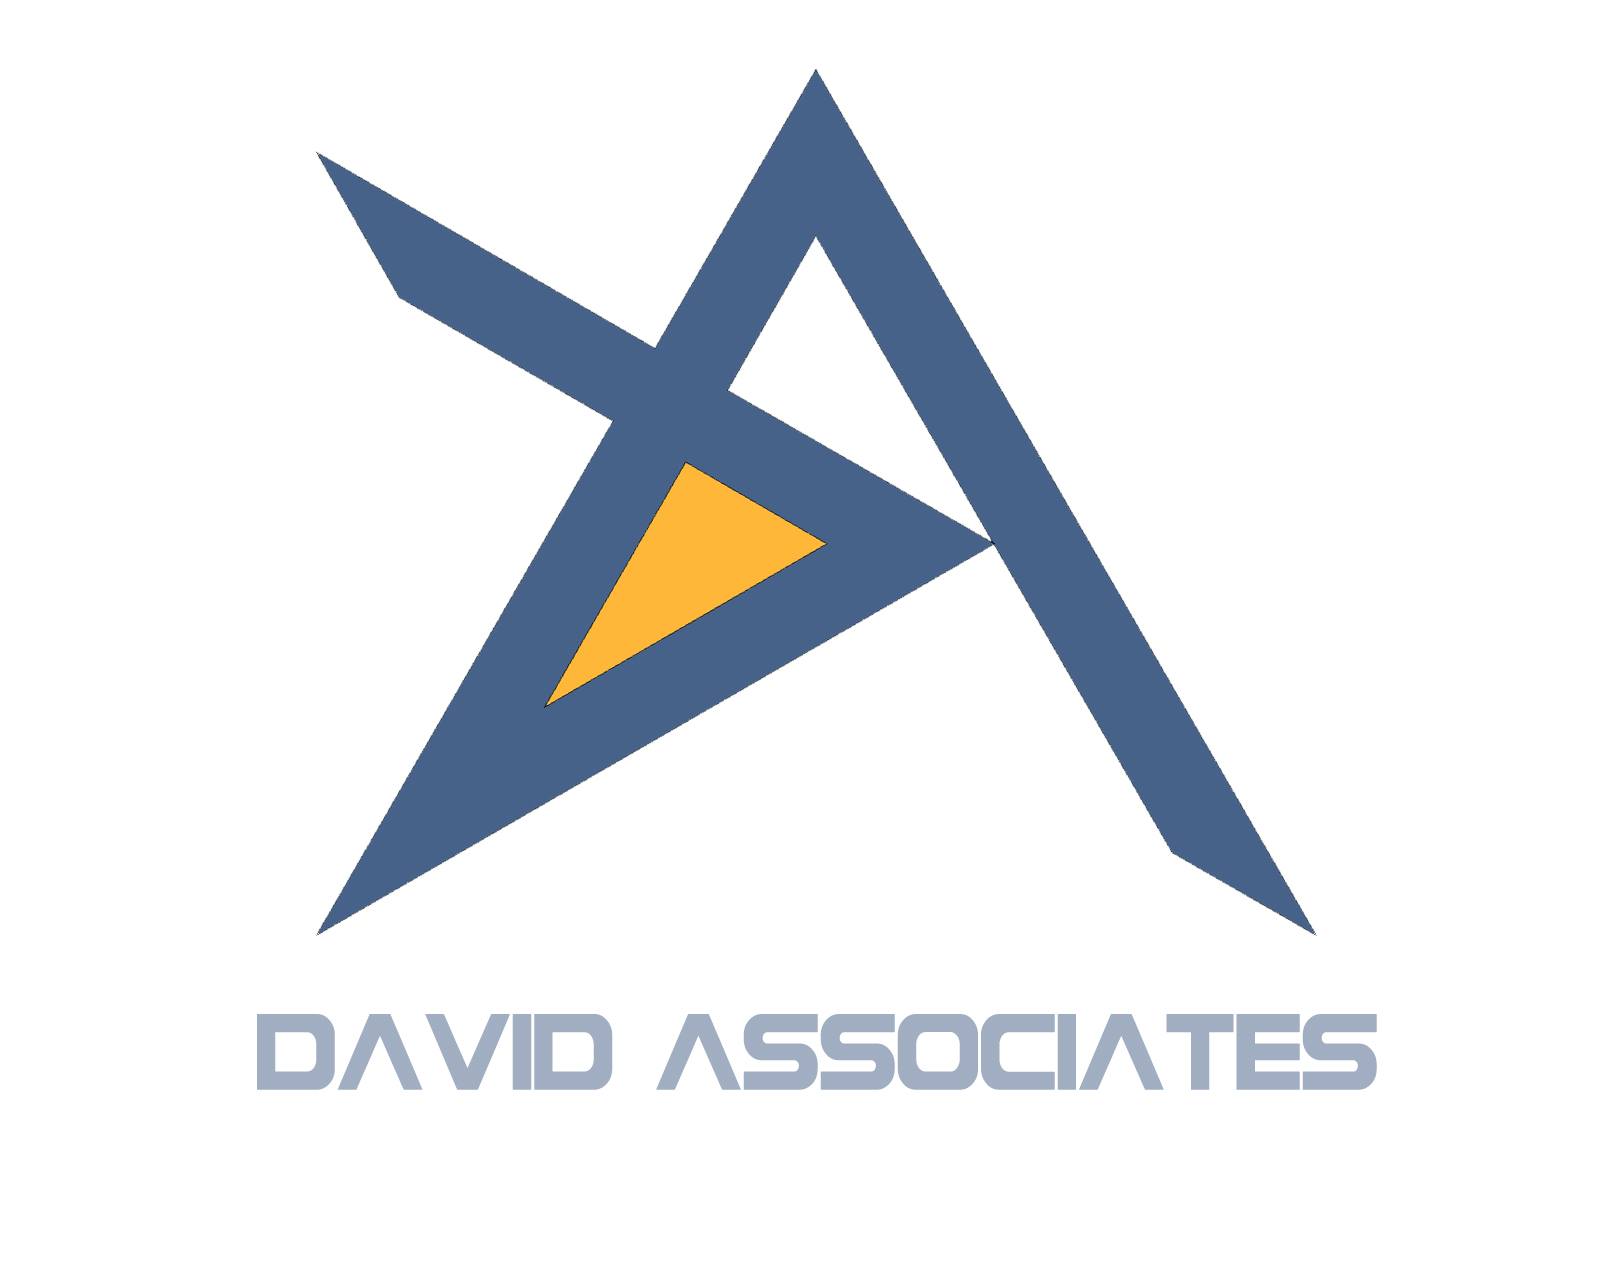 David Associates|Legal Services|Professional Services